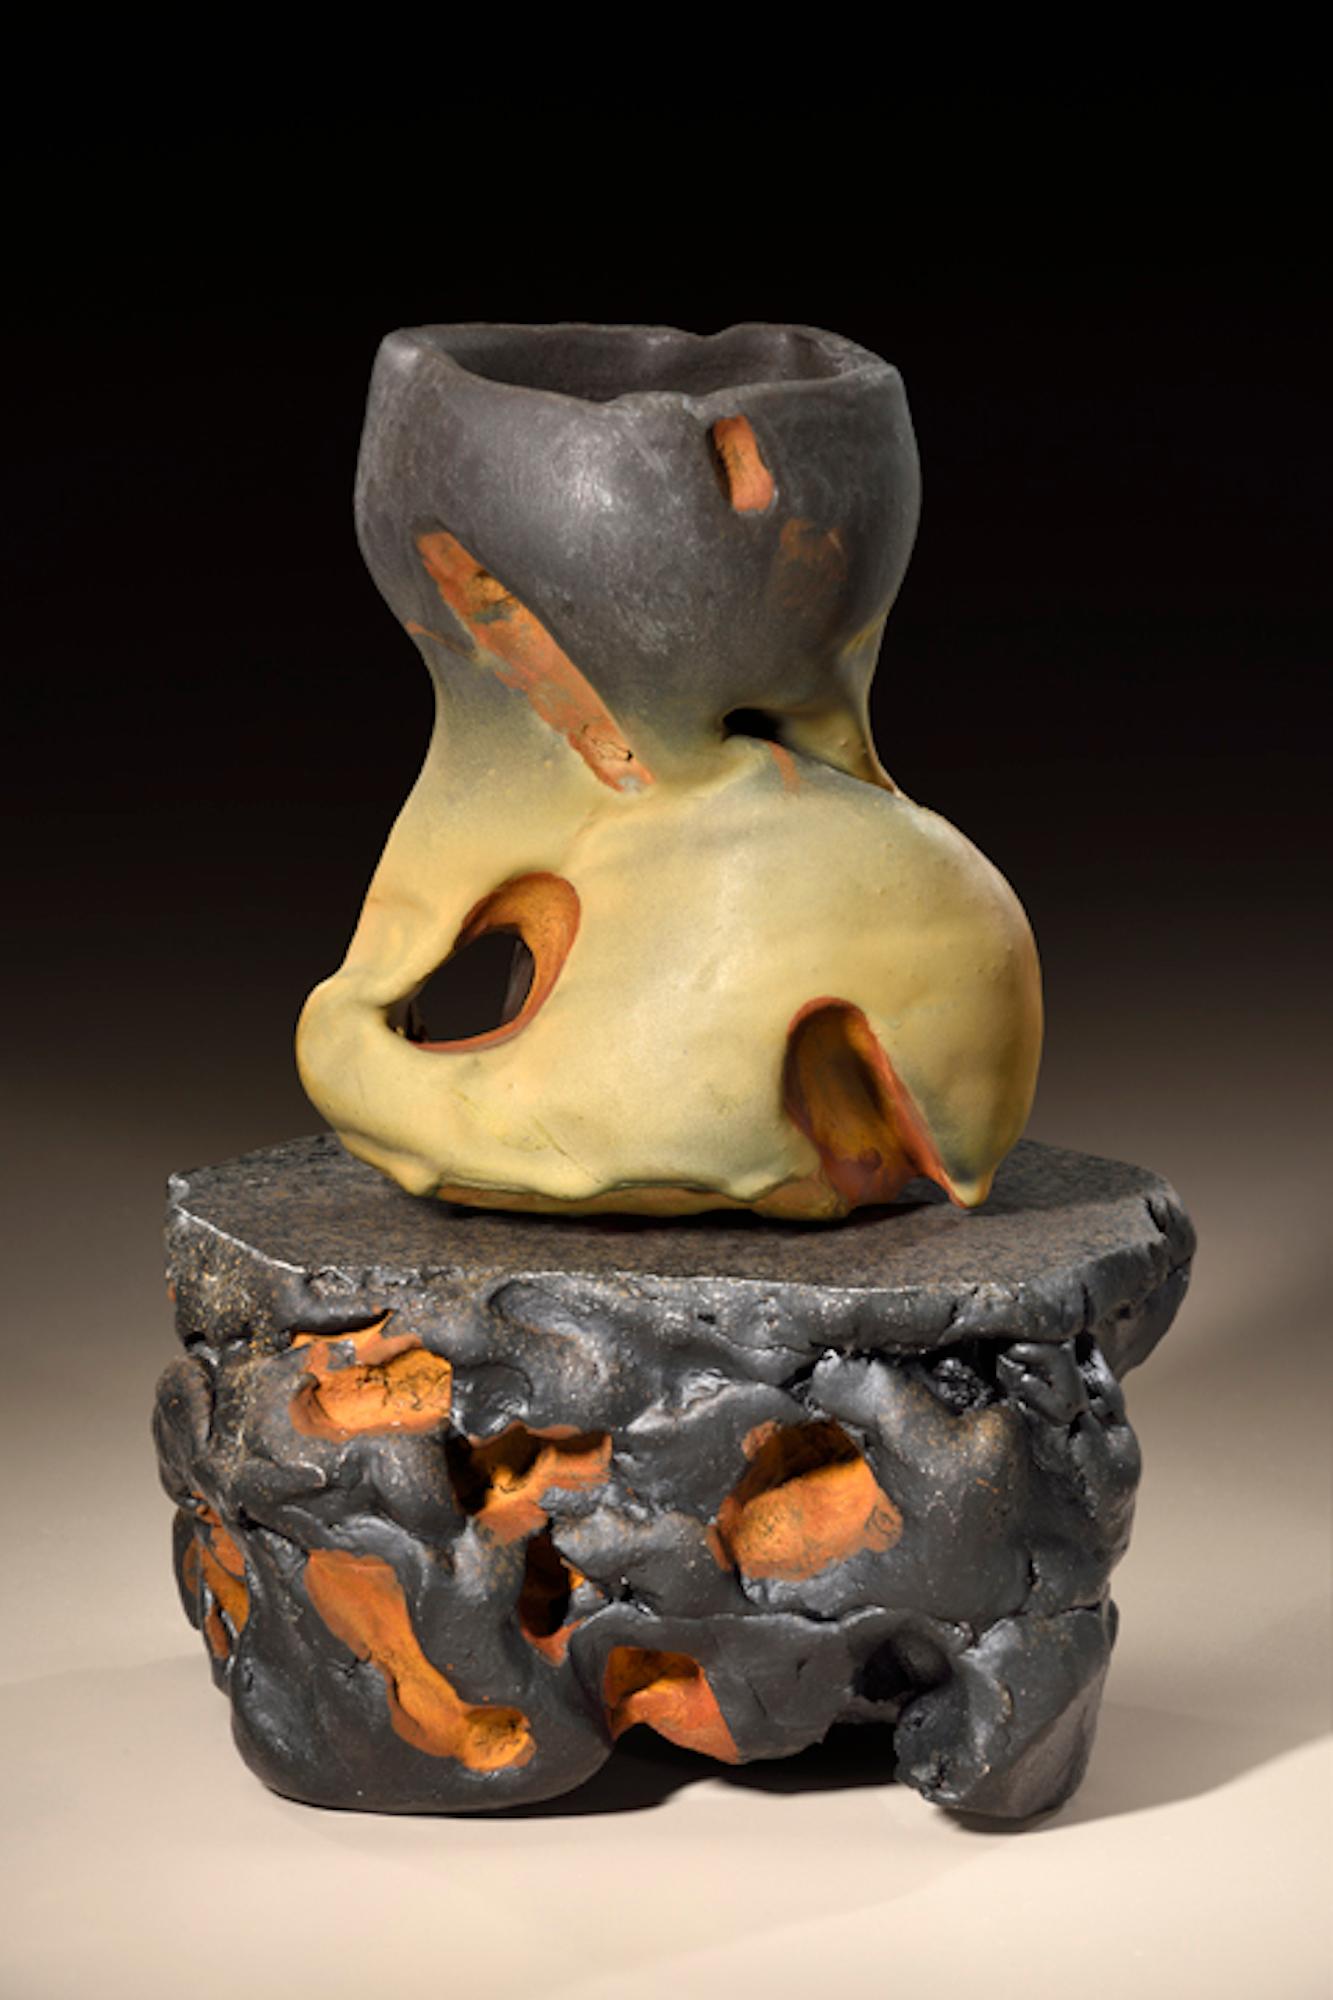 Glazed Richard Hirsch Ceramic Scholar Rock Cup Sculpture #46, 2018 For Sale